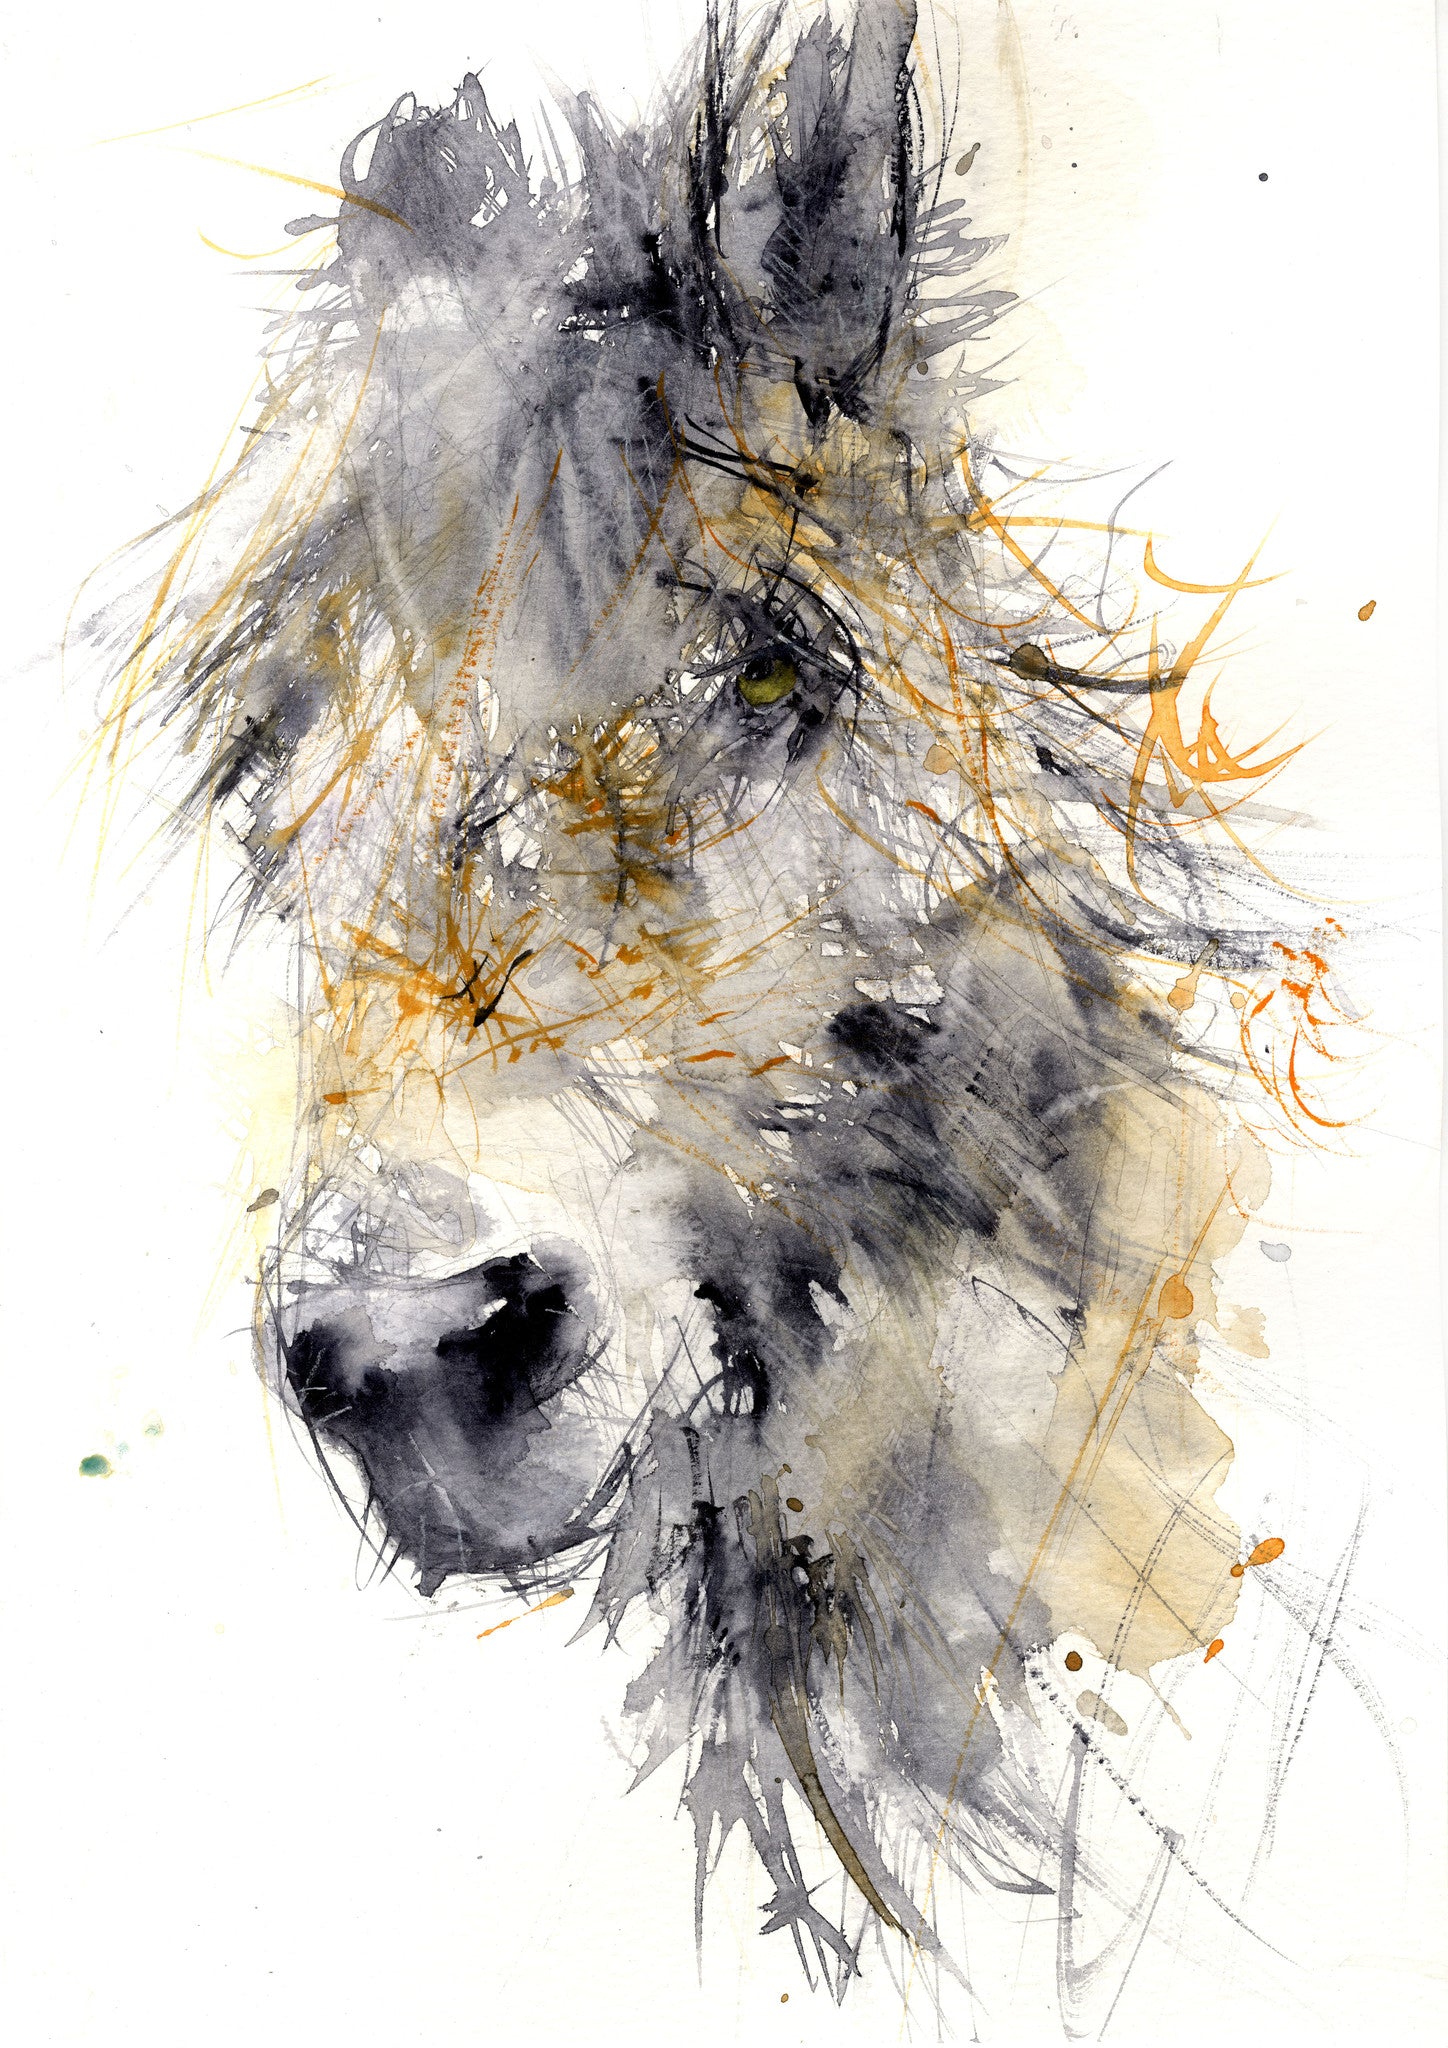 limited edition PRINT of my original DONKEY watercolour - Jen Buckley Art limited edition animal art prints